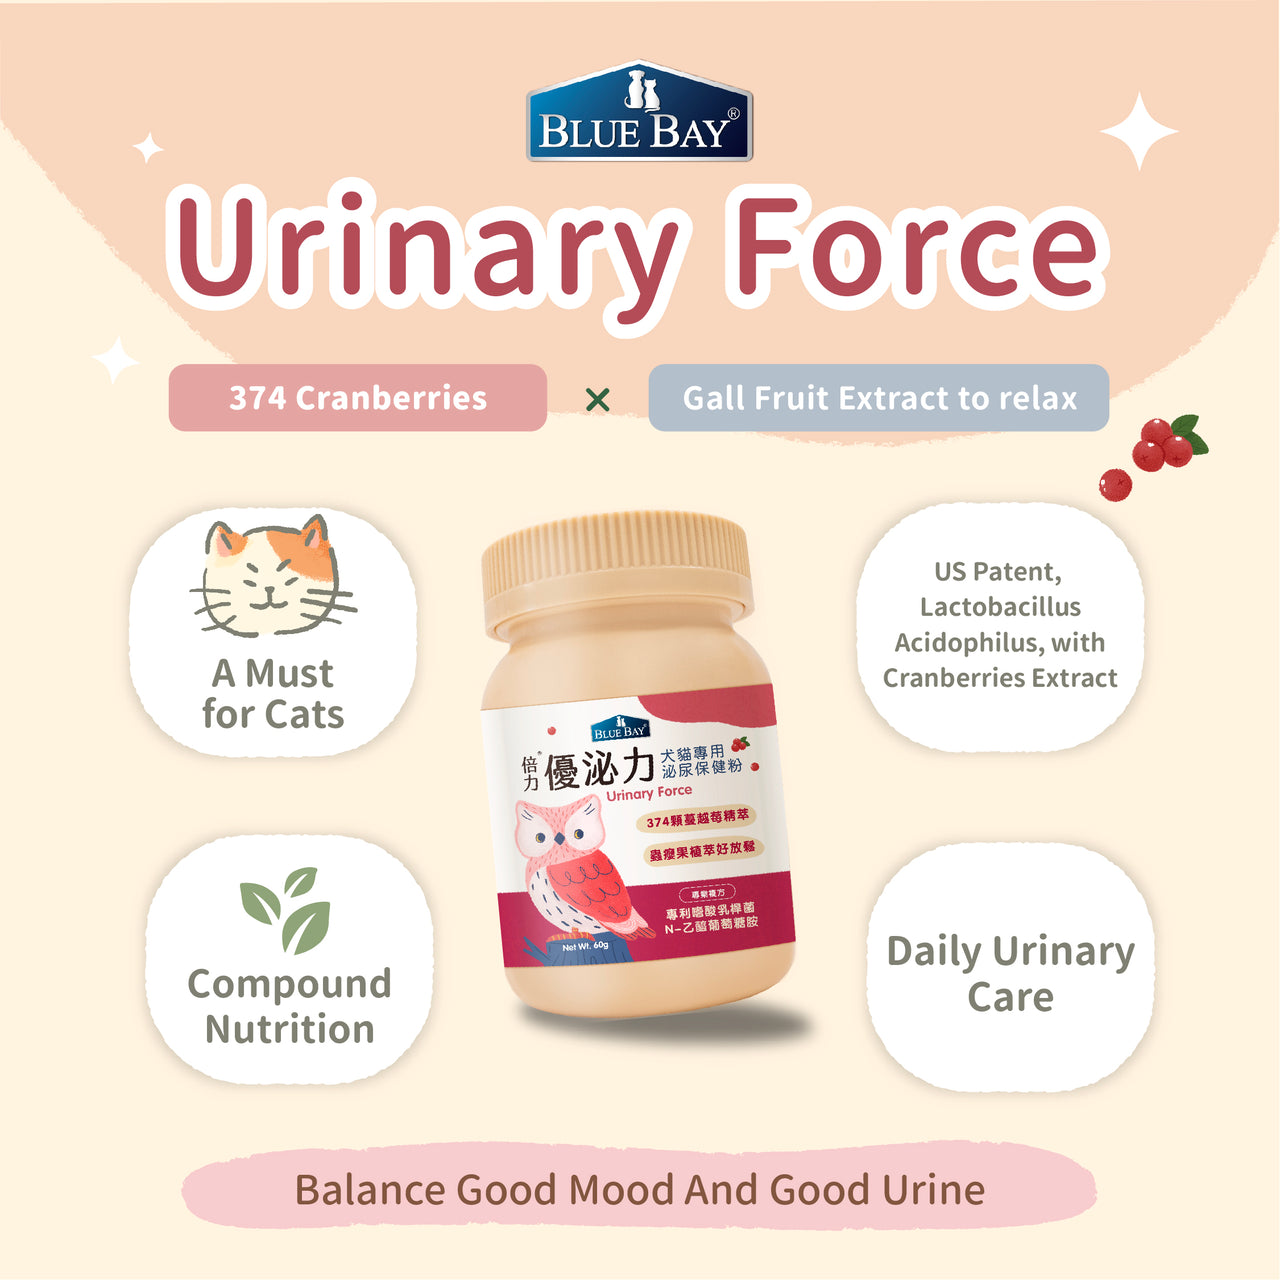 Urinary Force